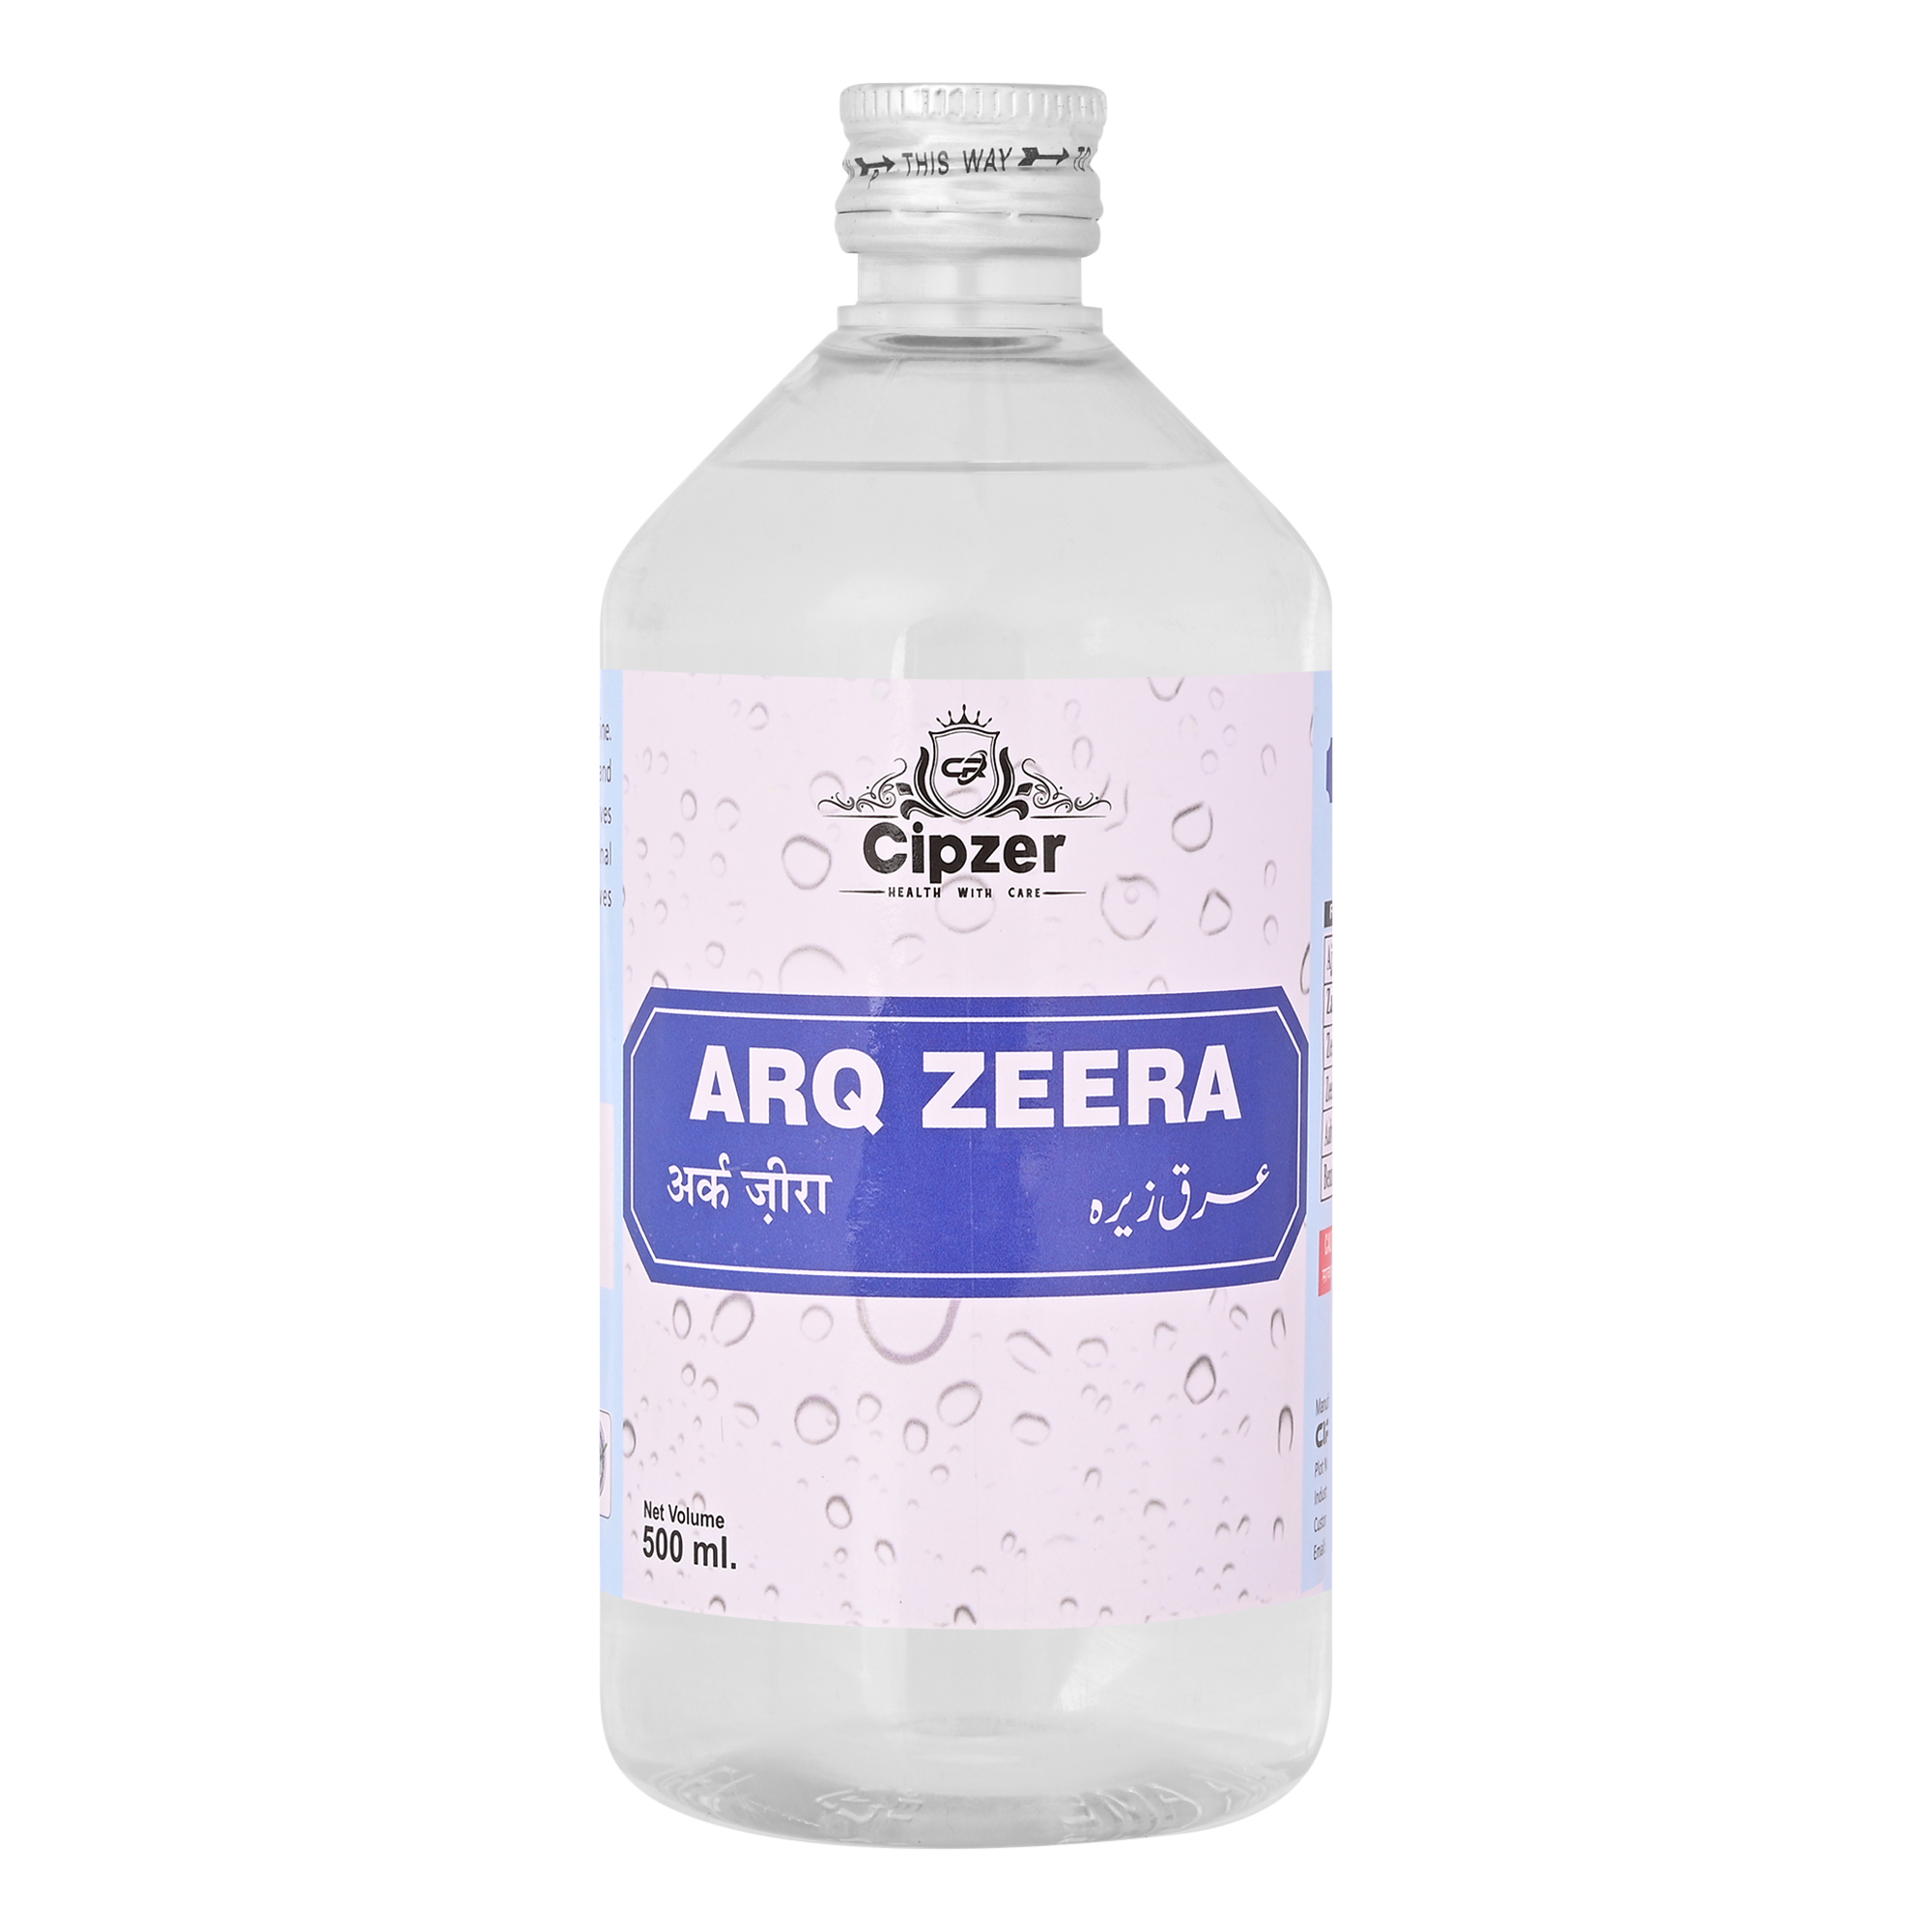 Buy Cipzer Arq-e-Zeera at Best Price Online